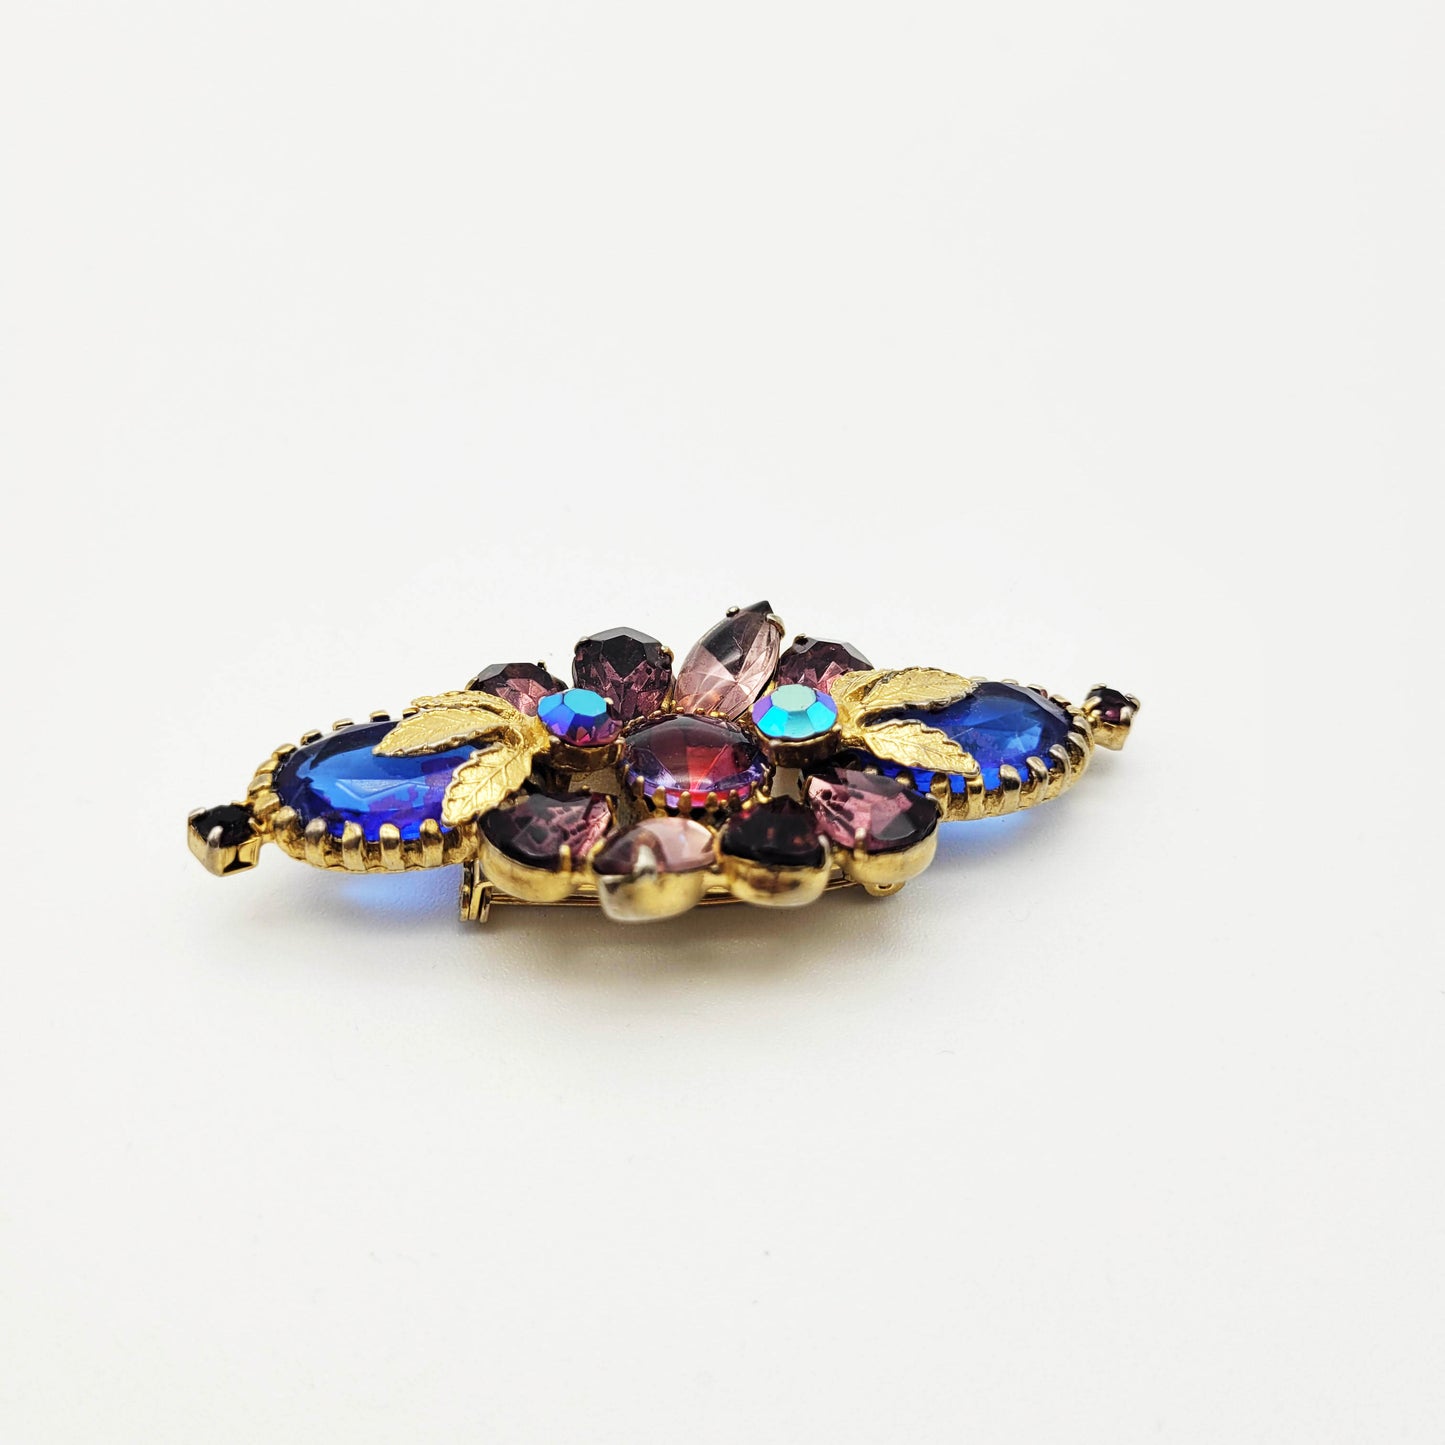 Vintage couture flower brooch